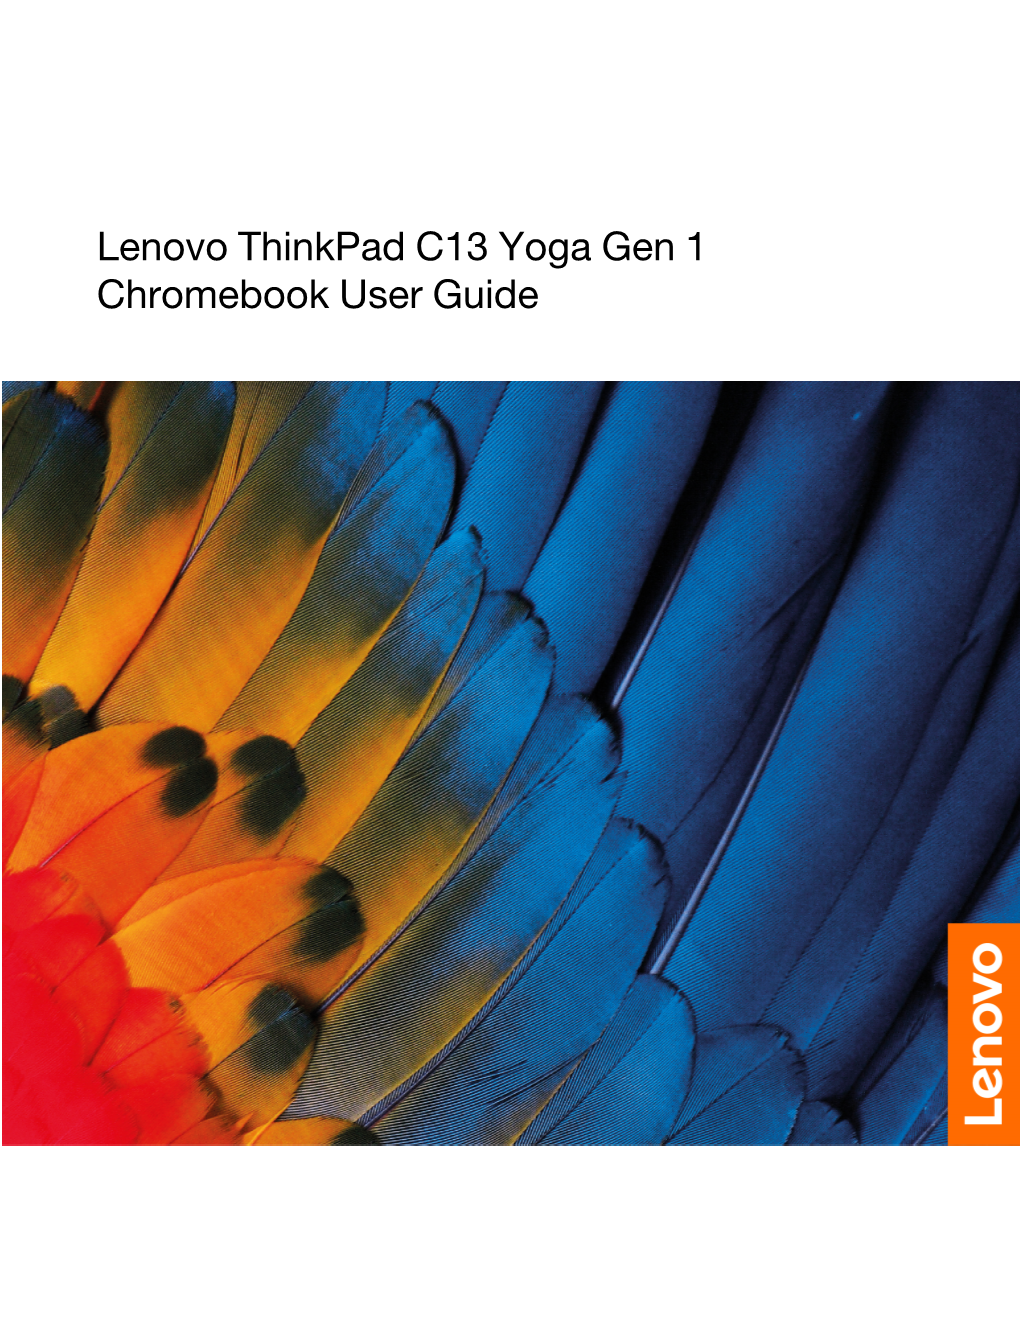 Lenovo Thinkpad C13 Yoga Gen 1 Chromebook User Guide Read This First